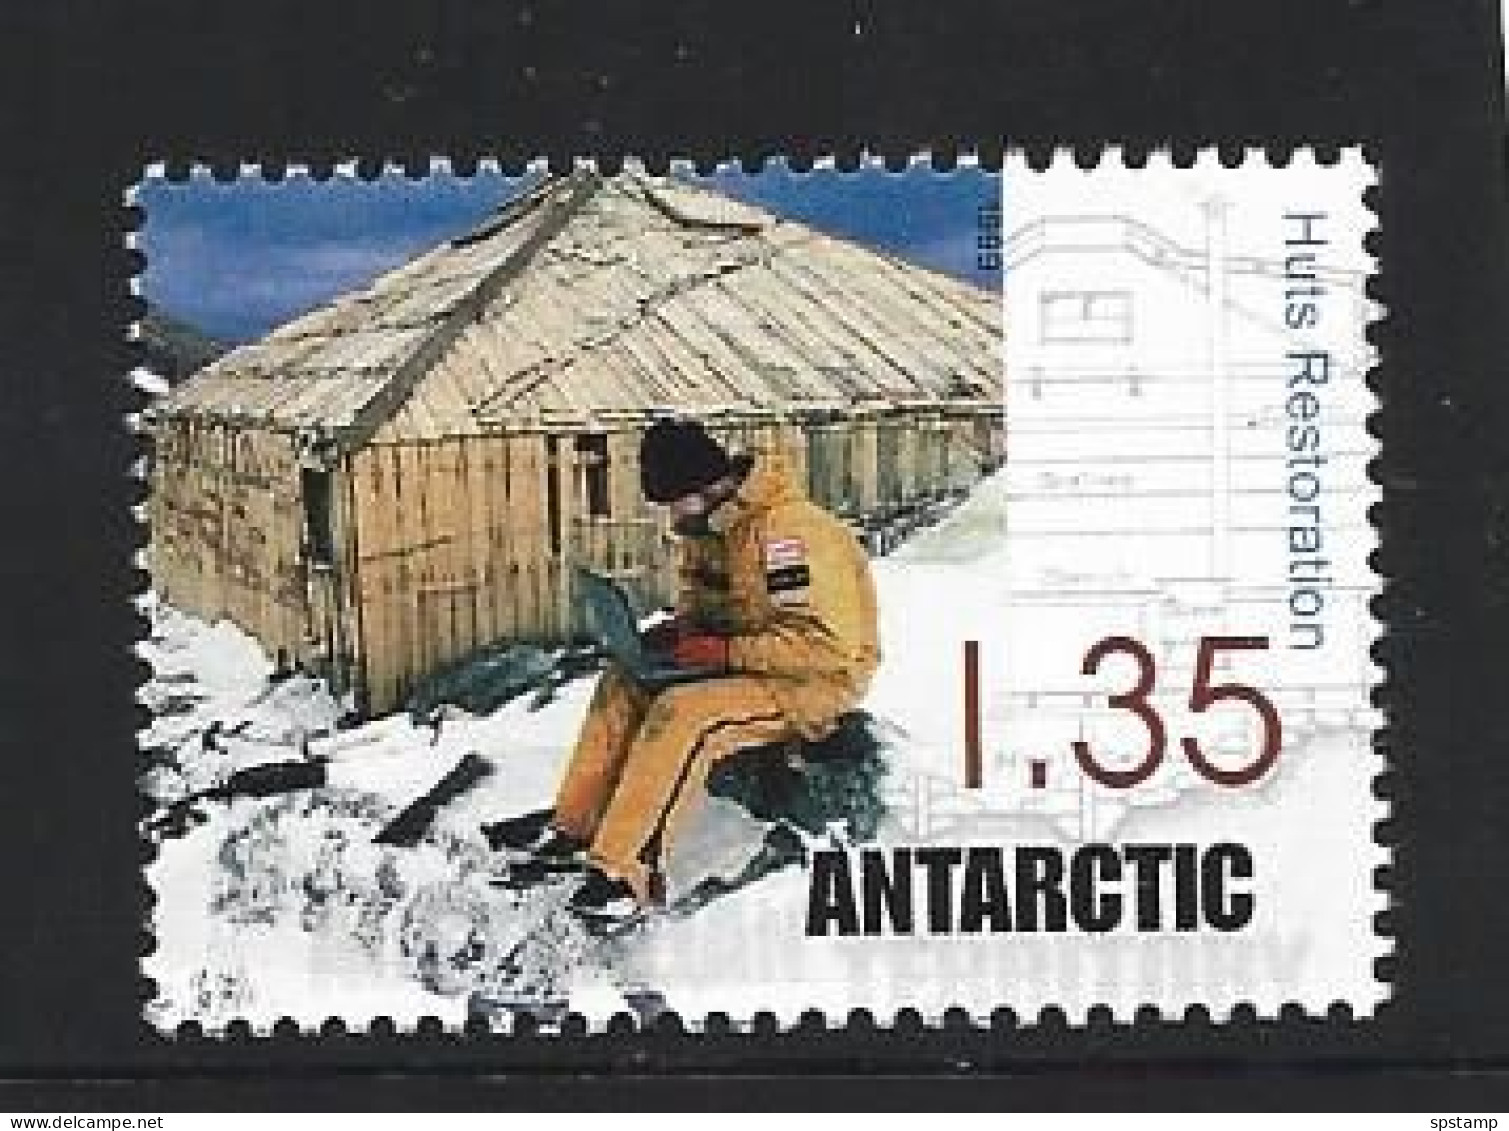 Australian Antarctic Territory 1999 $1.35 Mawson Huts Single VFU Australian CTO - Used Stamps